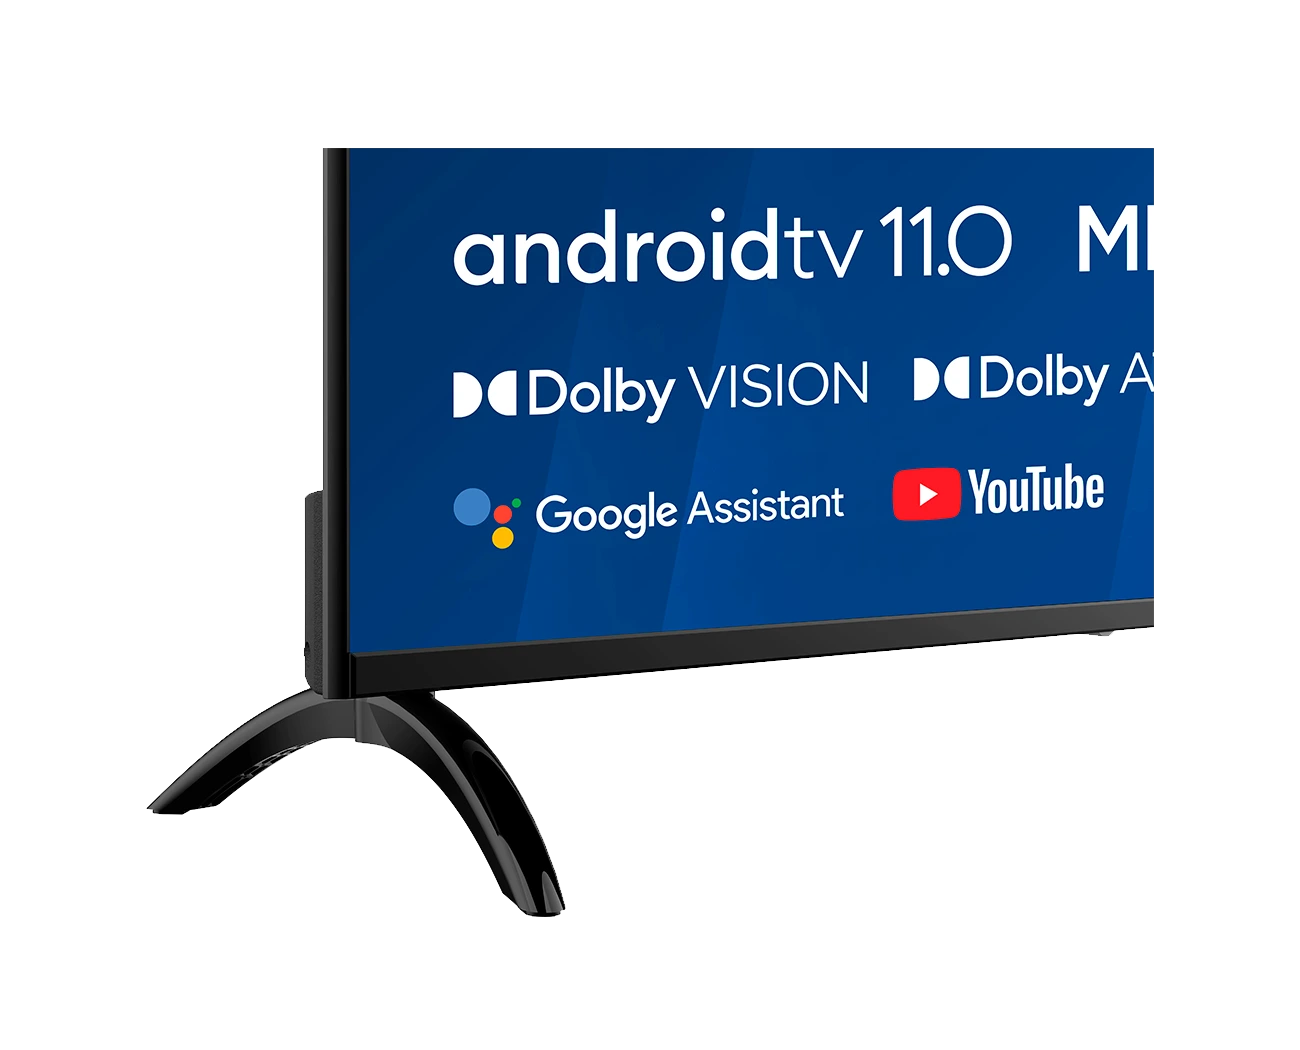 UHD 4K Android TV Blaupunkt 50UBC6000